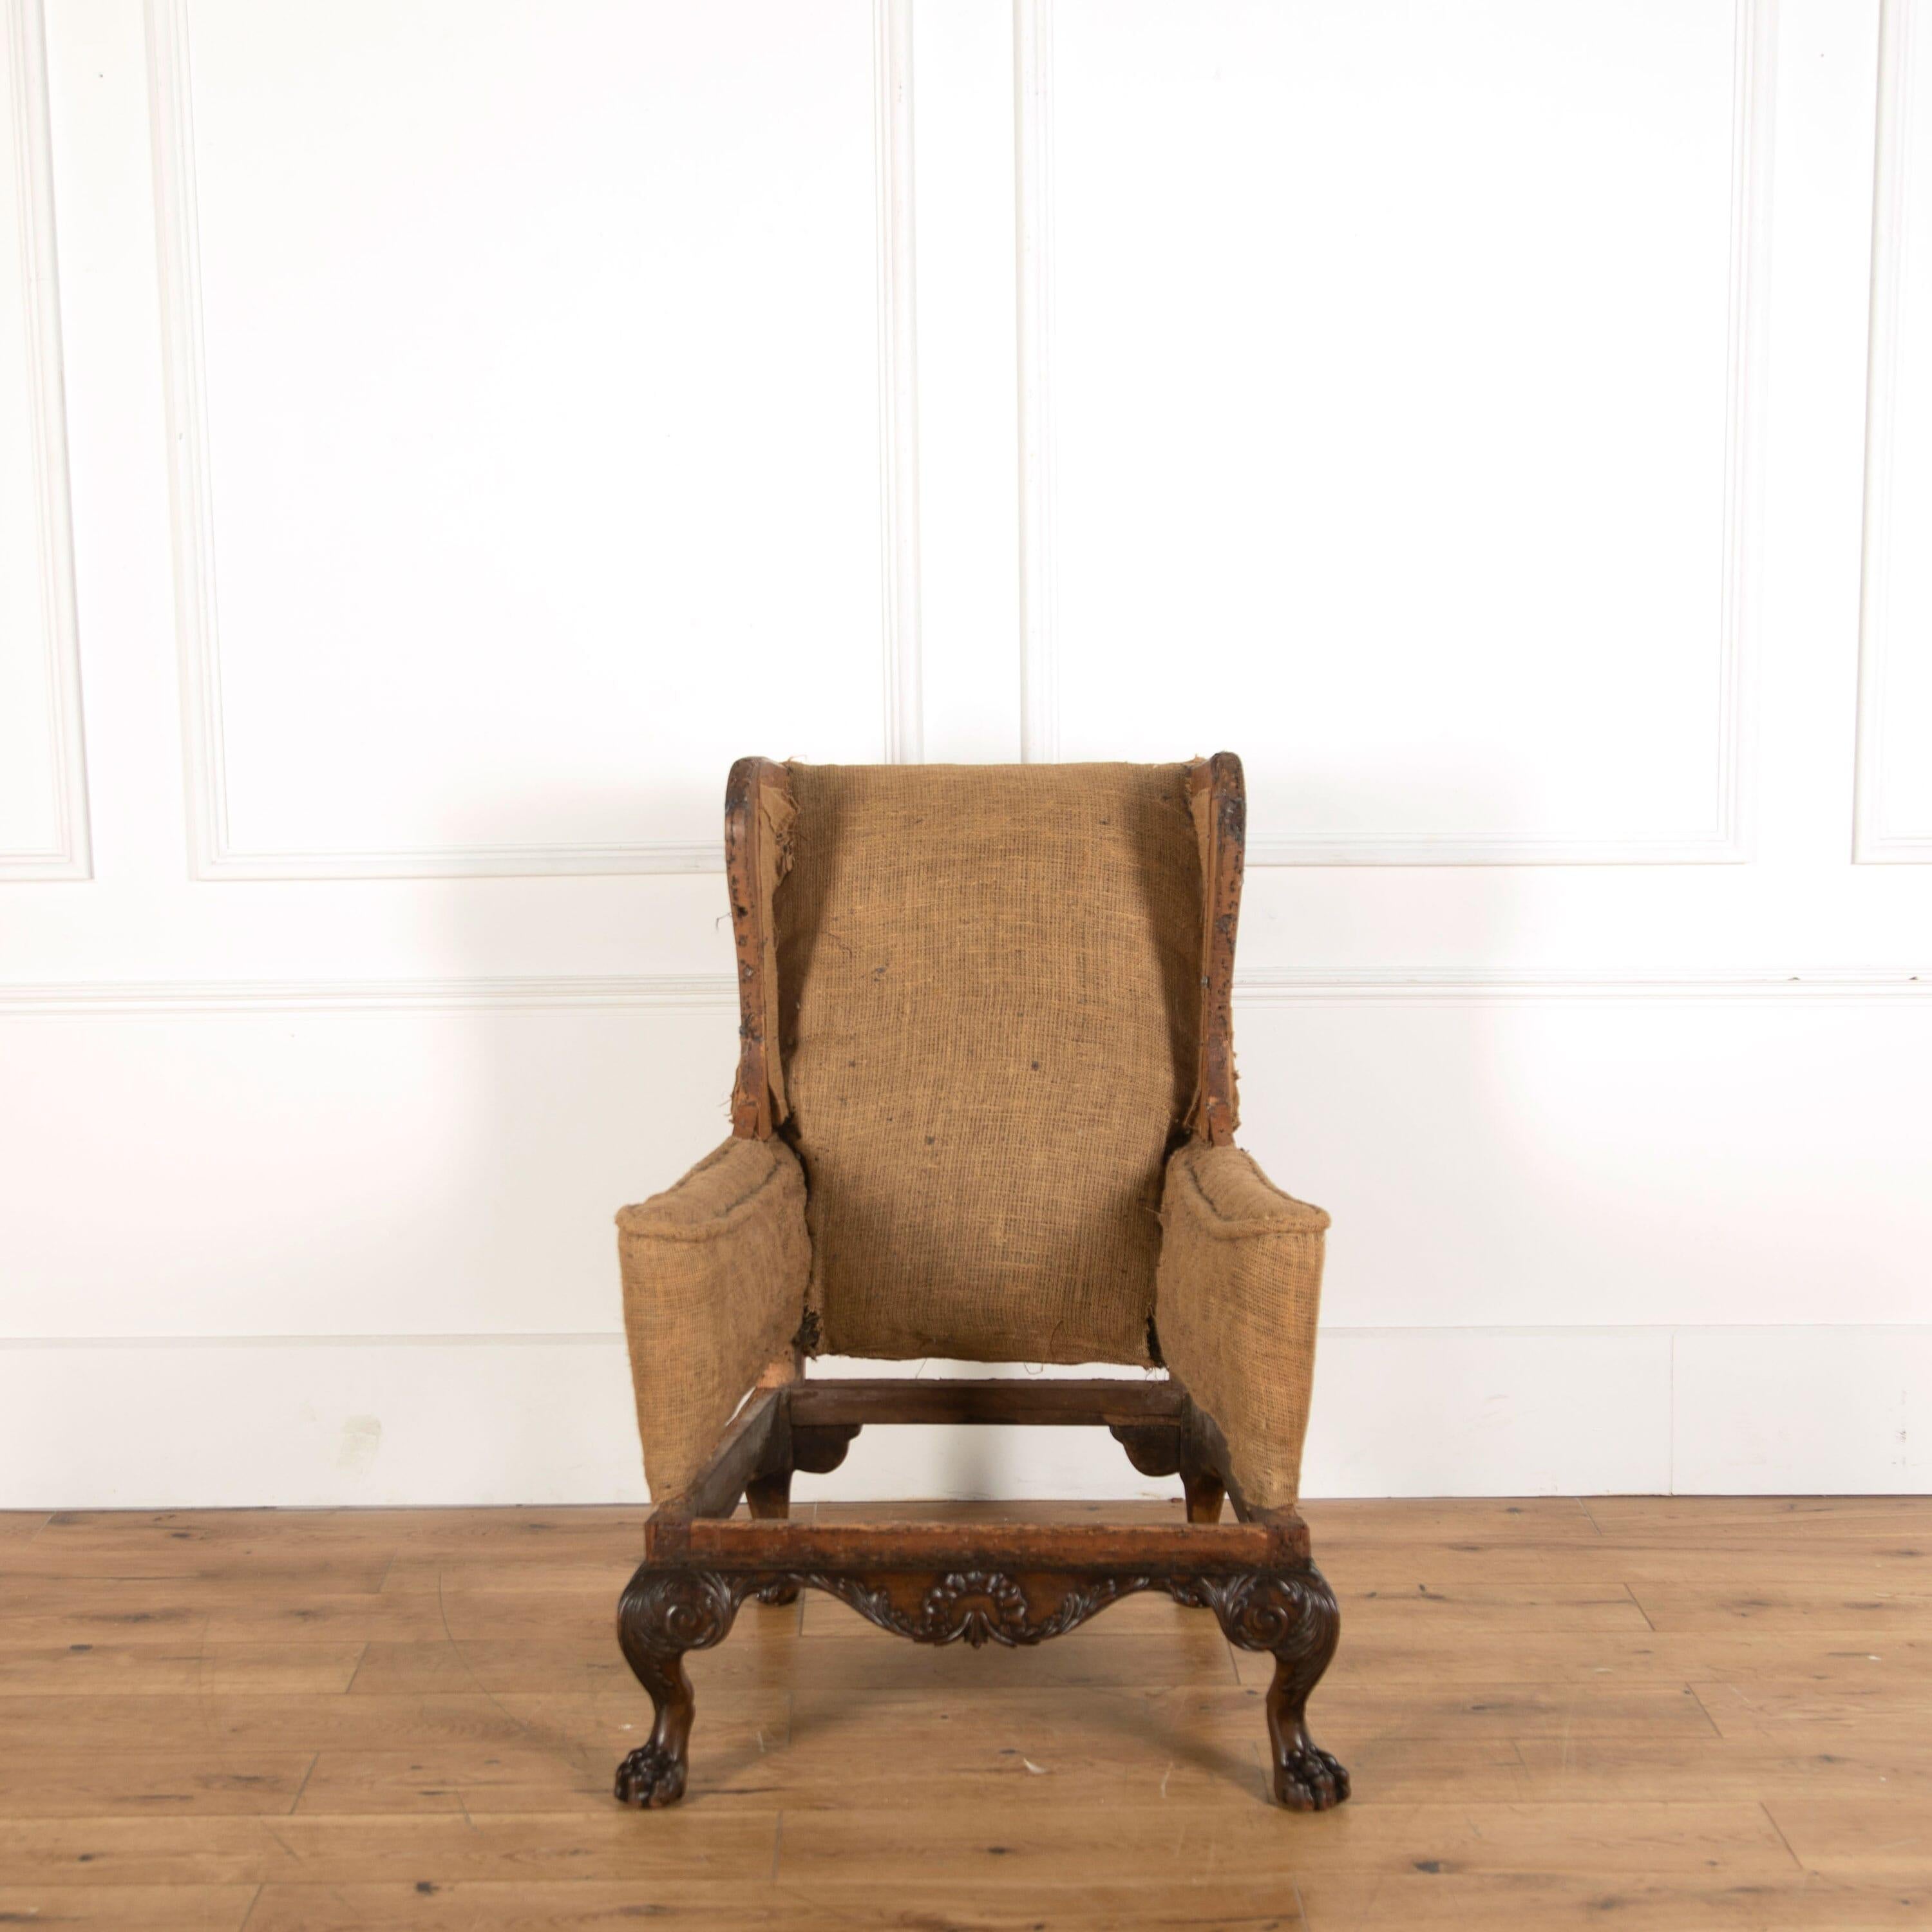 19th century walnut wingback Gainsborough armchair, circa 1860.